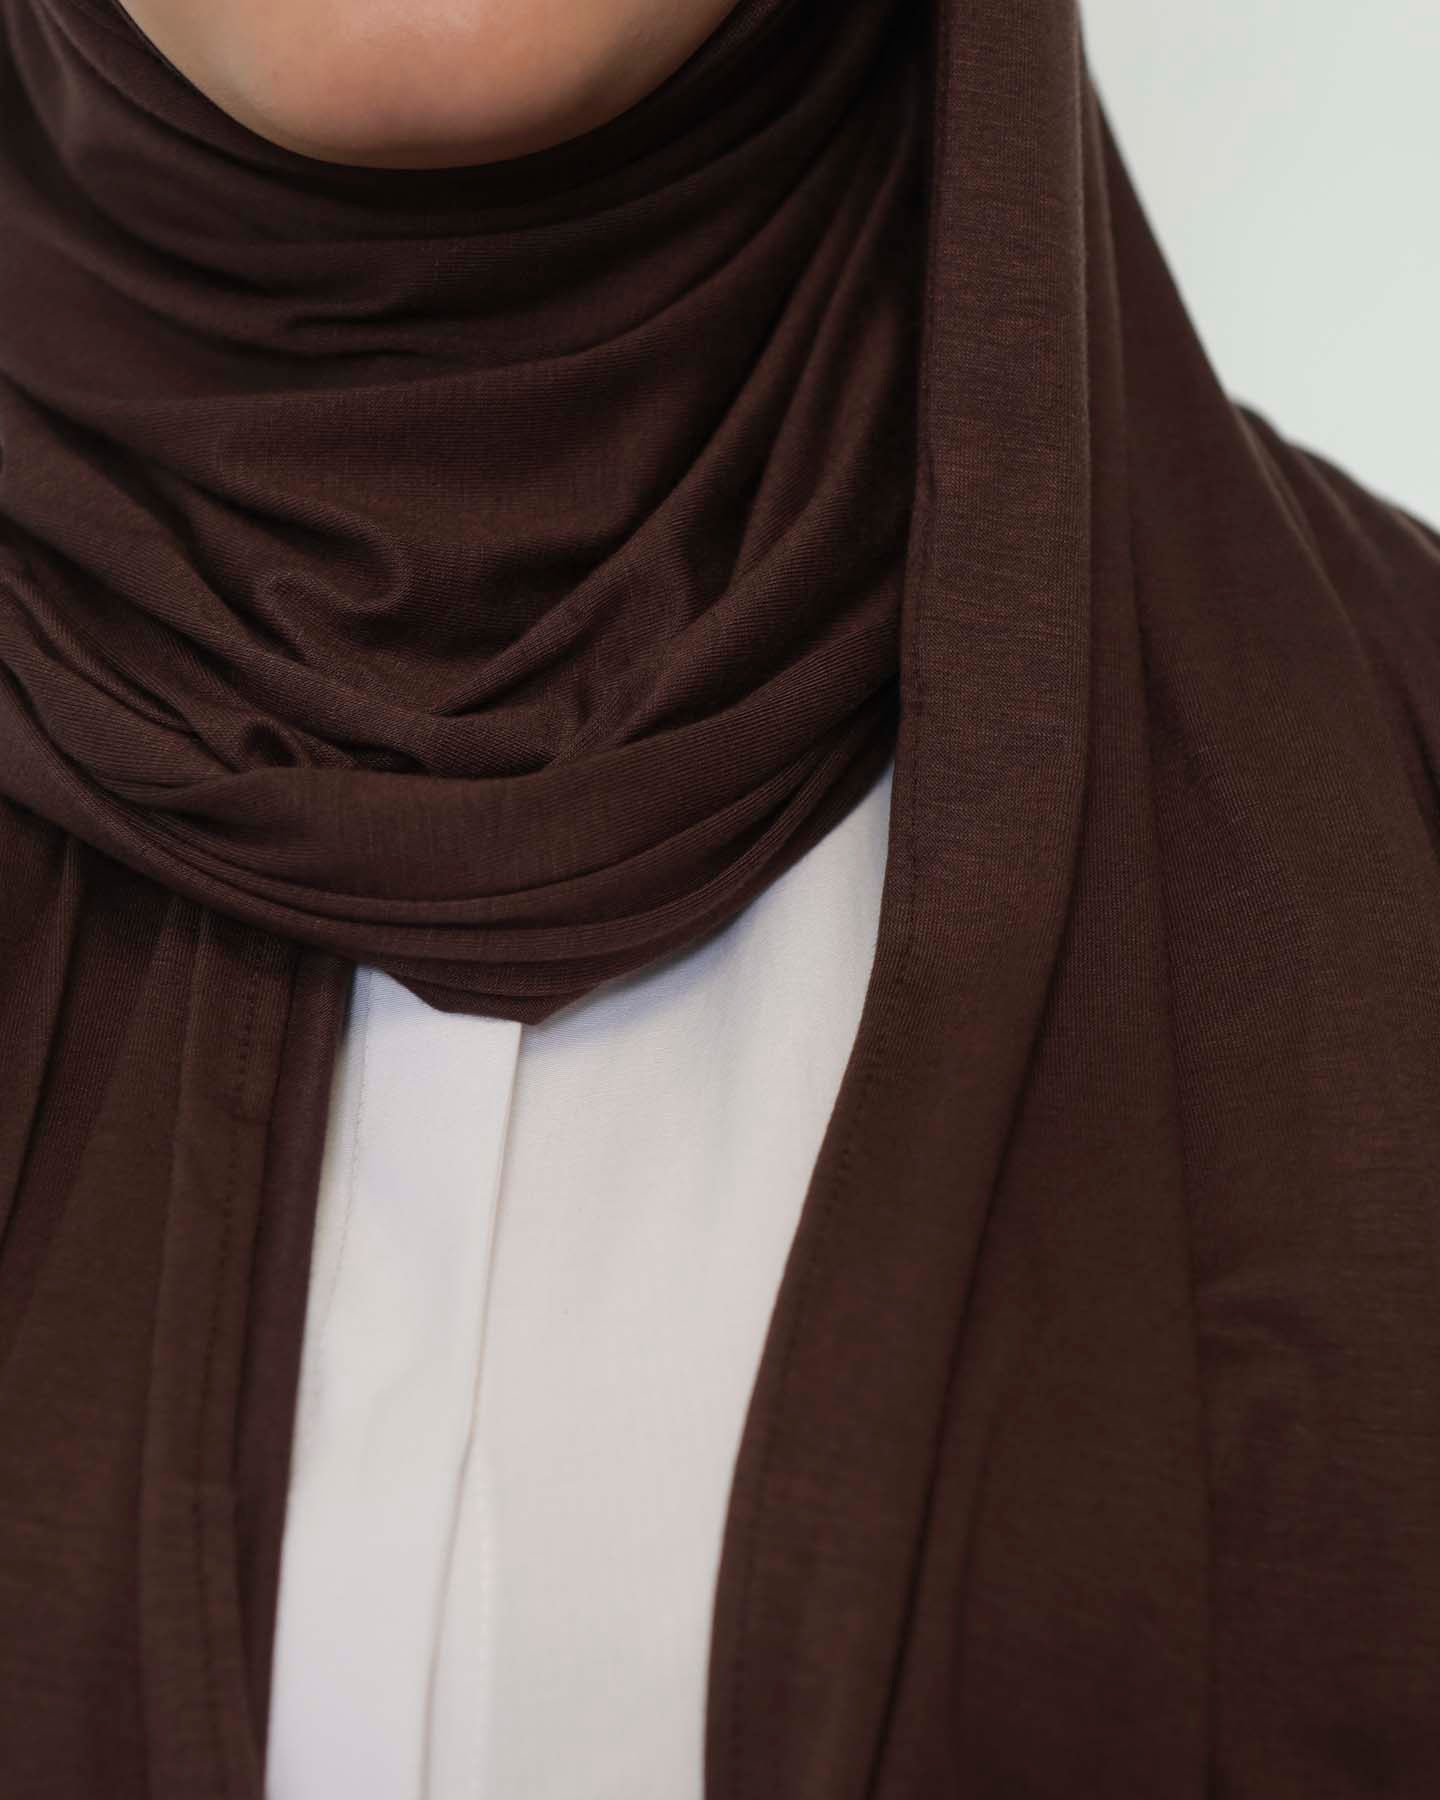 Premium Jersey Hijab - Dark Brown